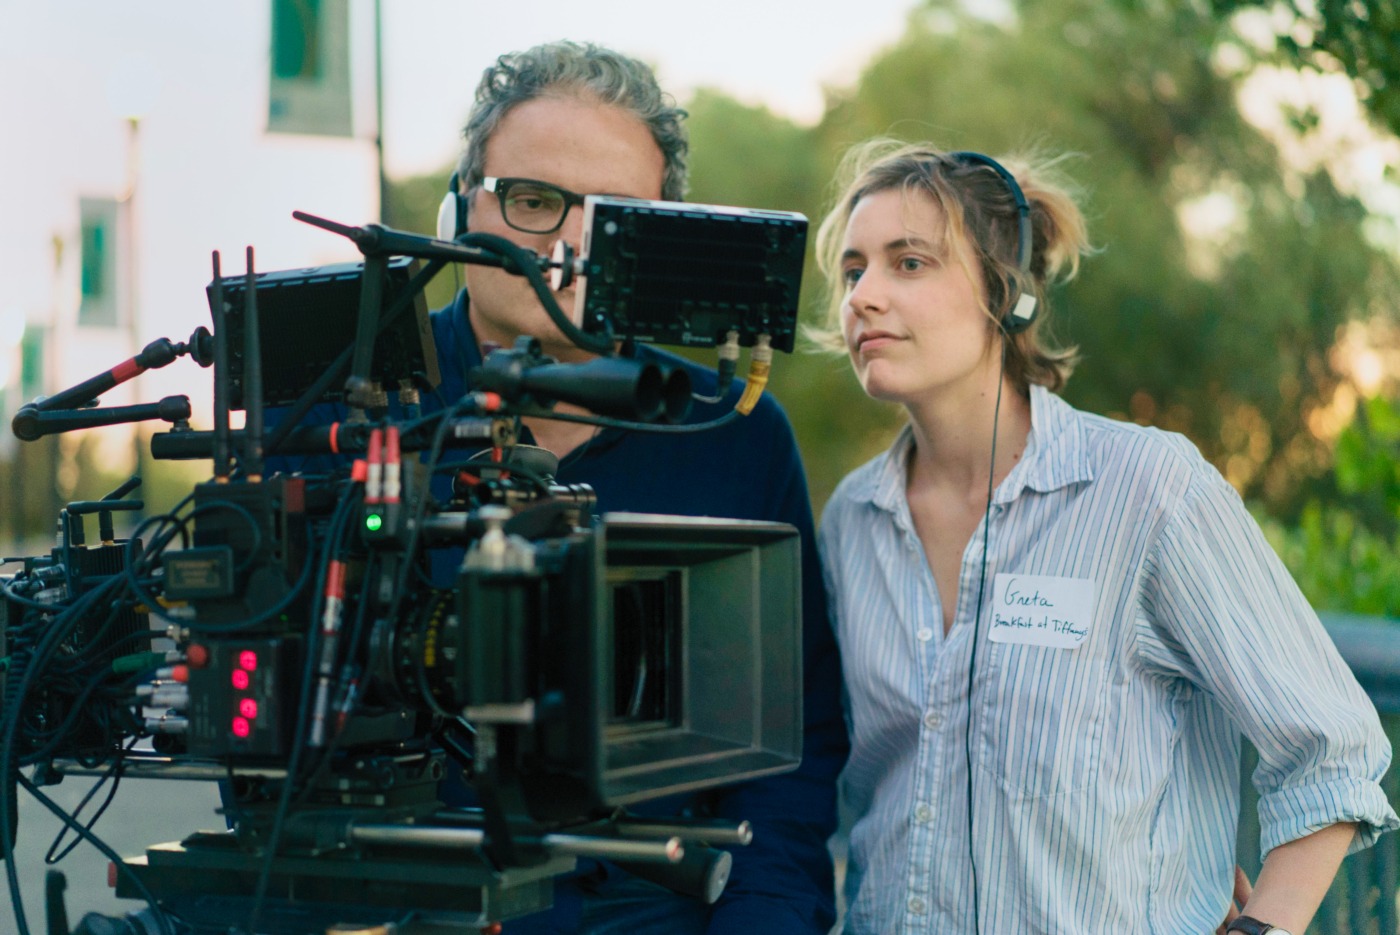 Greta Gerwig directing Lady Bird